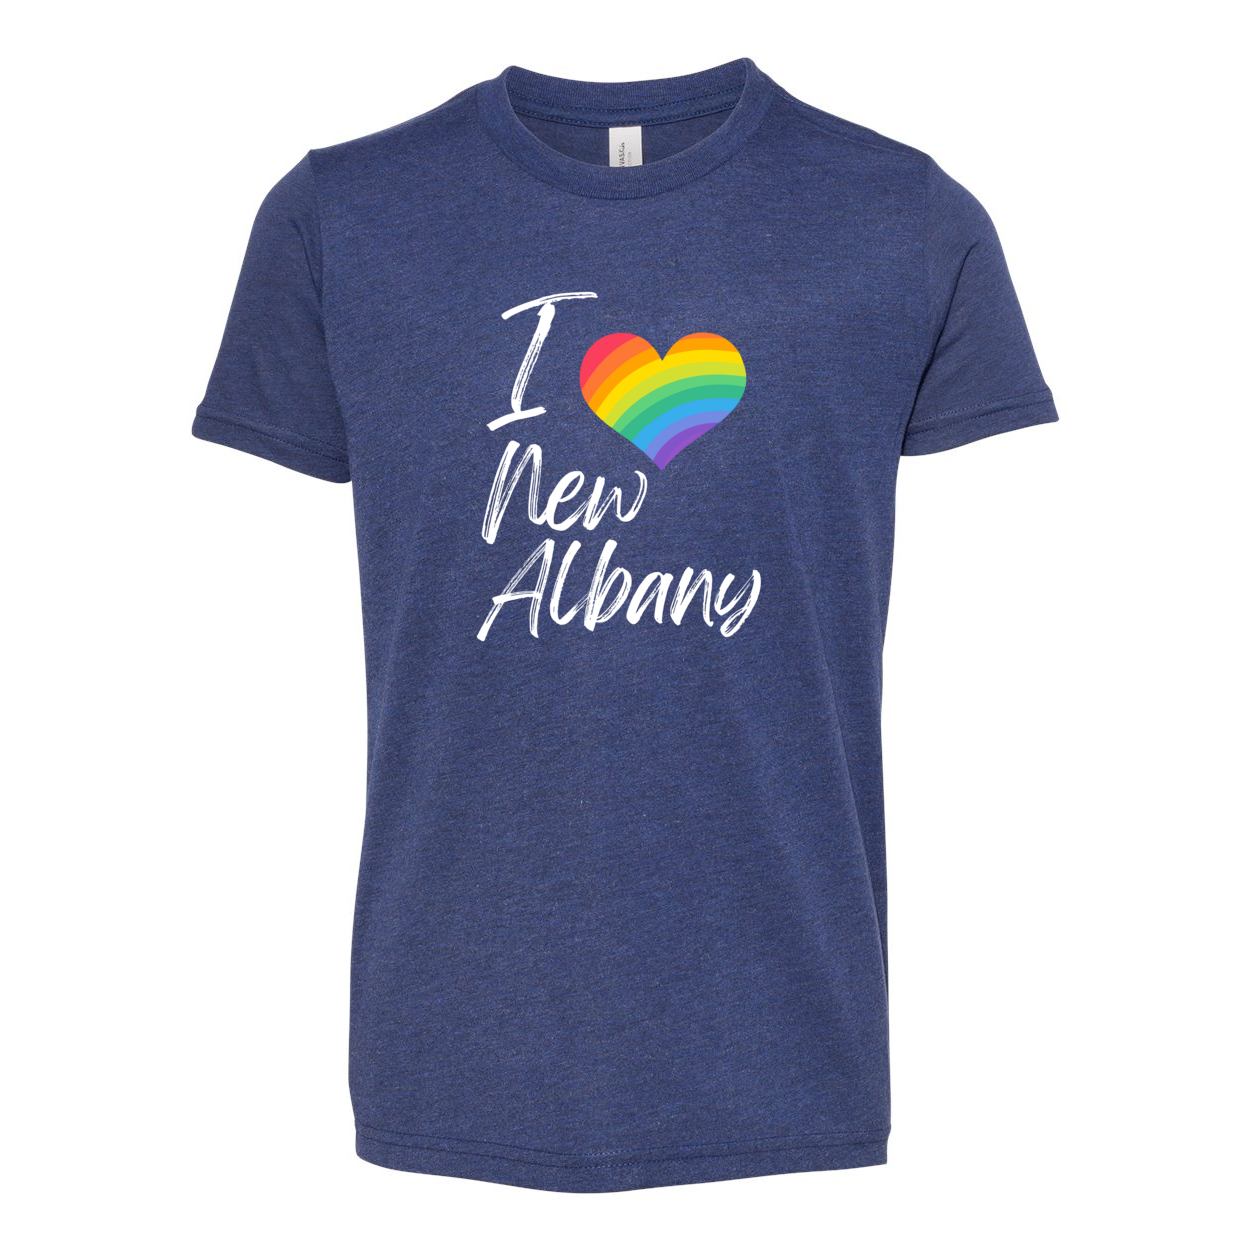 Youth City Rainbow Pride Heart Super Soft Short Sleeve Graphic Tee - New Albany